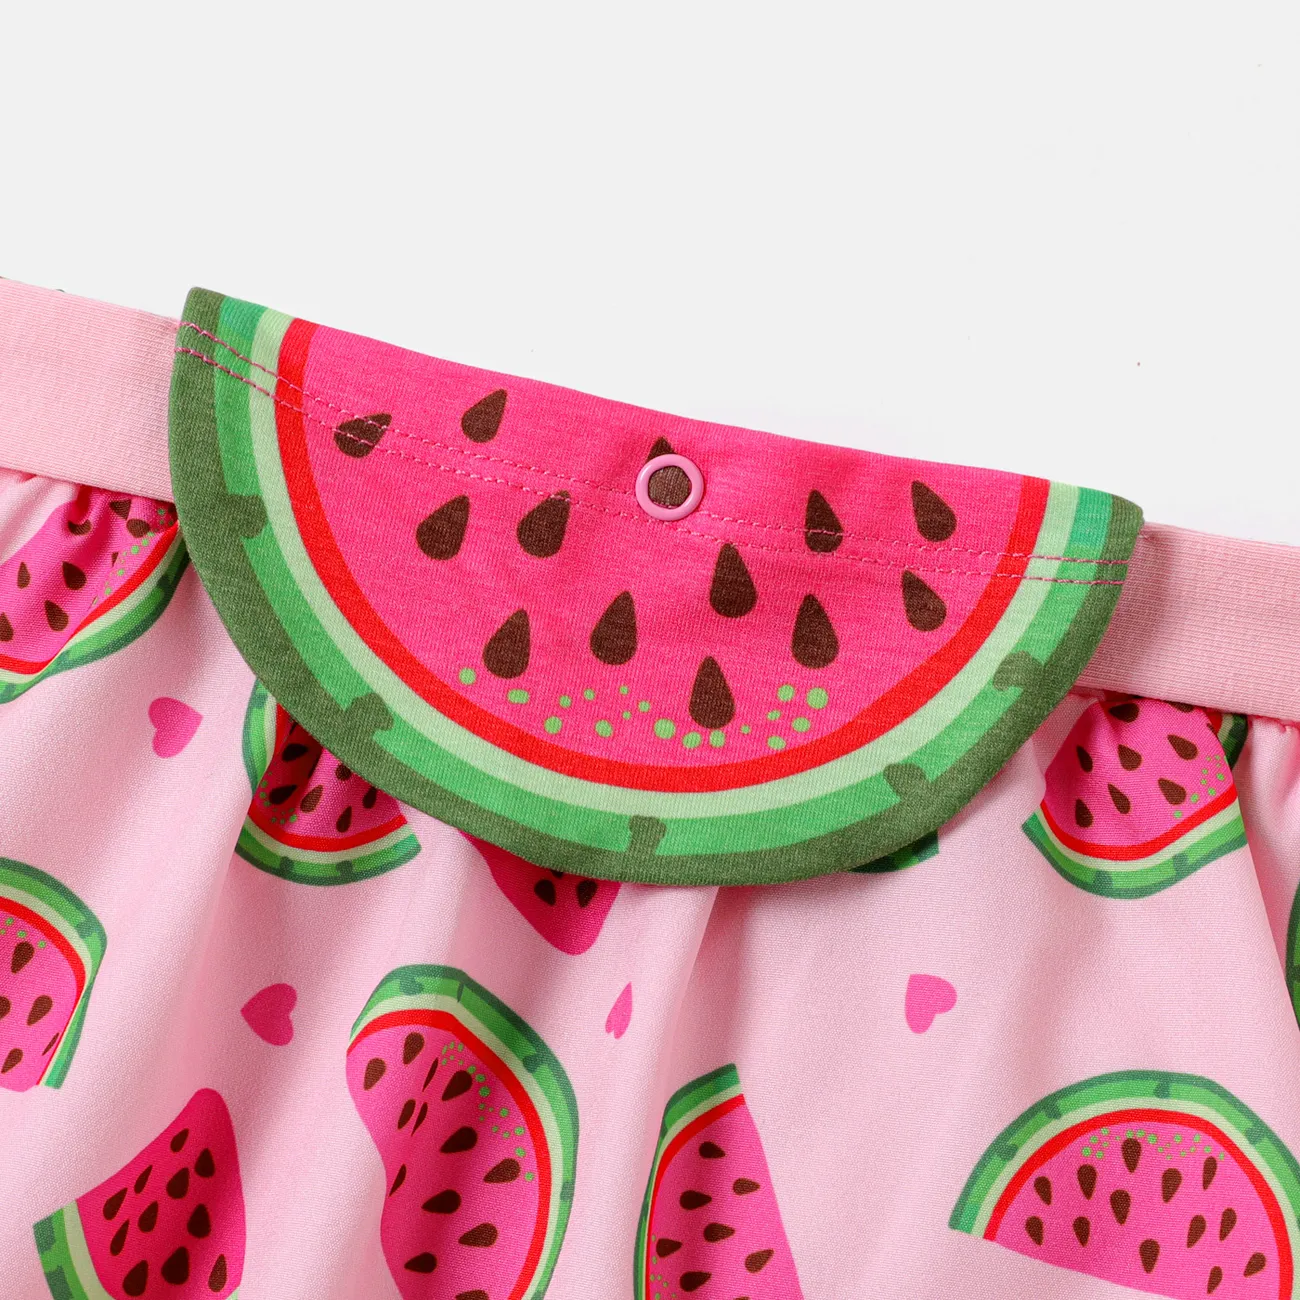 PAW Patrol Toddler Girl 2pcs Naia™ Character Print Flutter-sleeve Top and Watermelon Print Skirt Set Pink big image 1